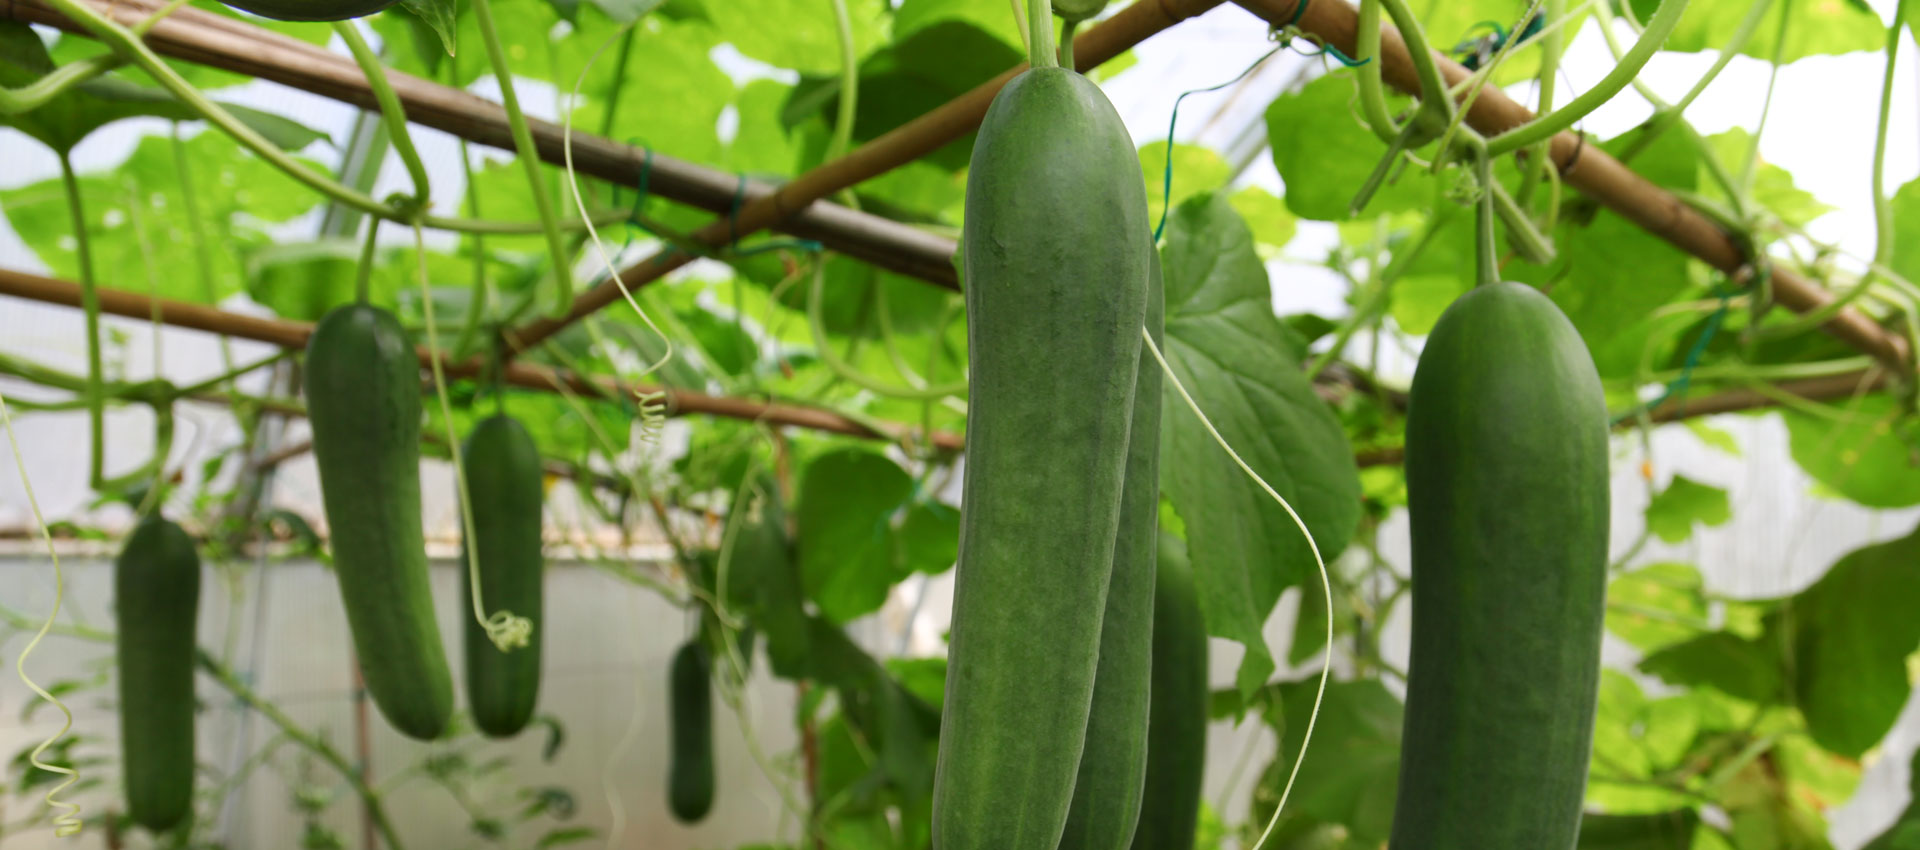 Cucumber plants